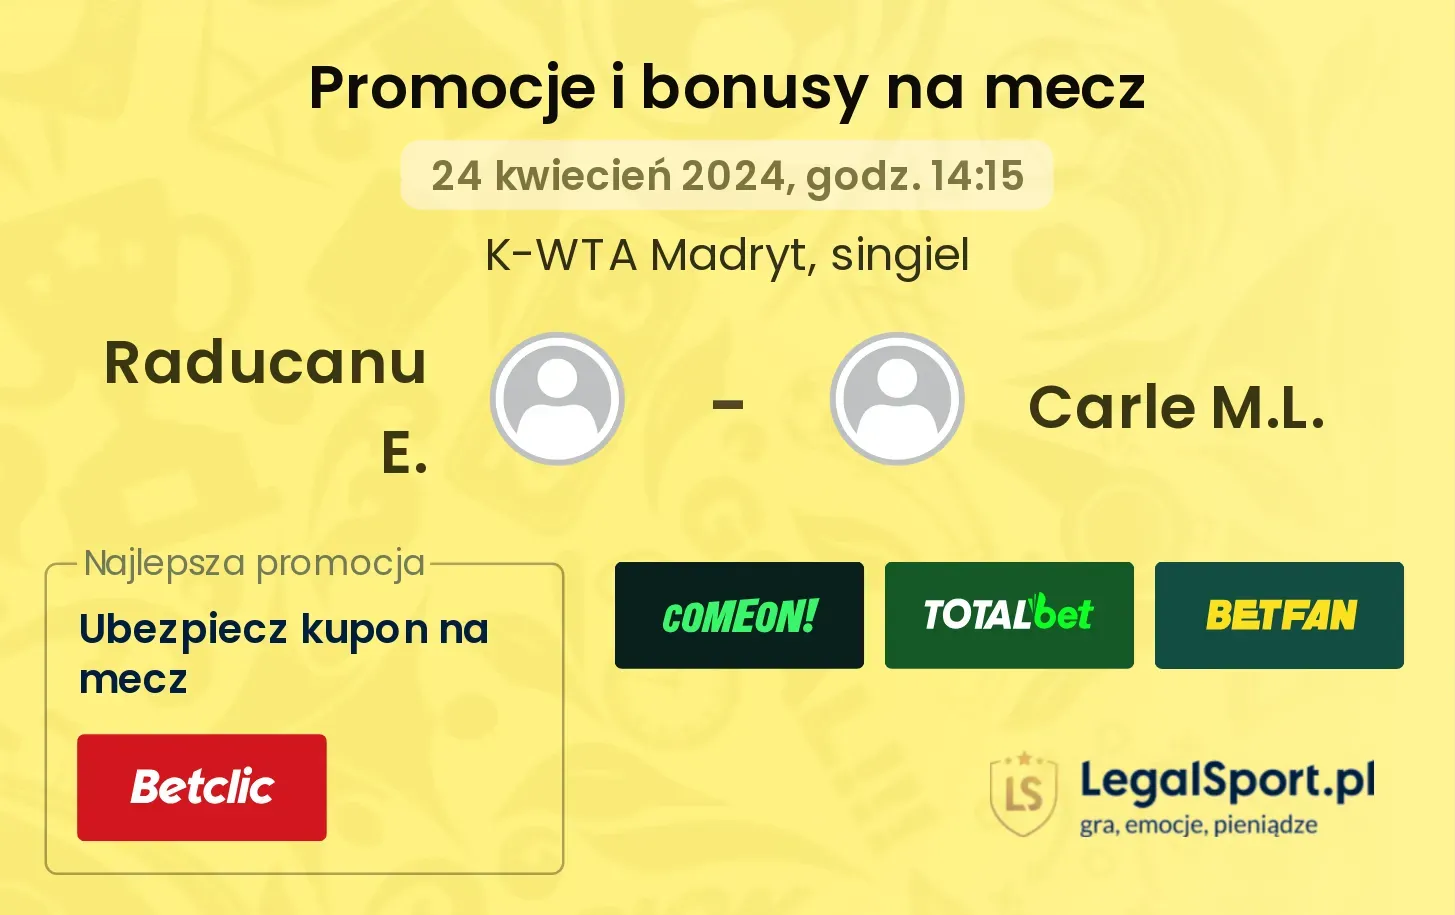 Raducanu E. - Carle M.L. promocje bonusy na mecz